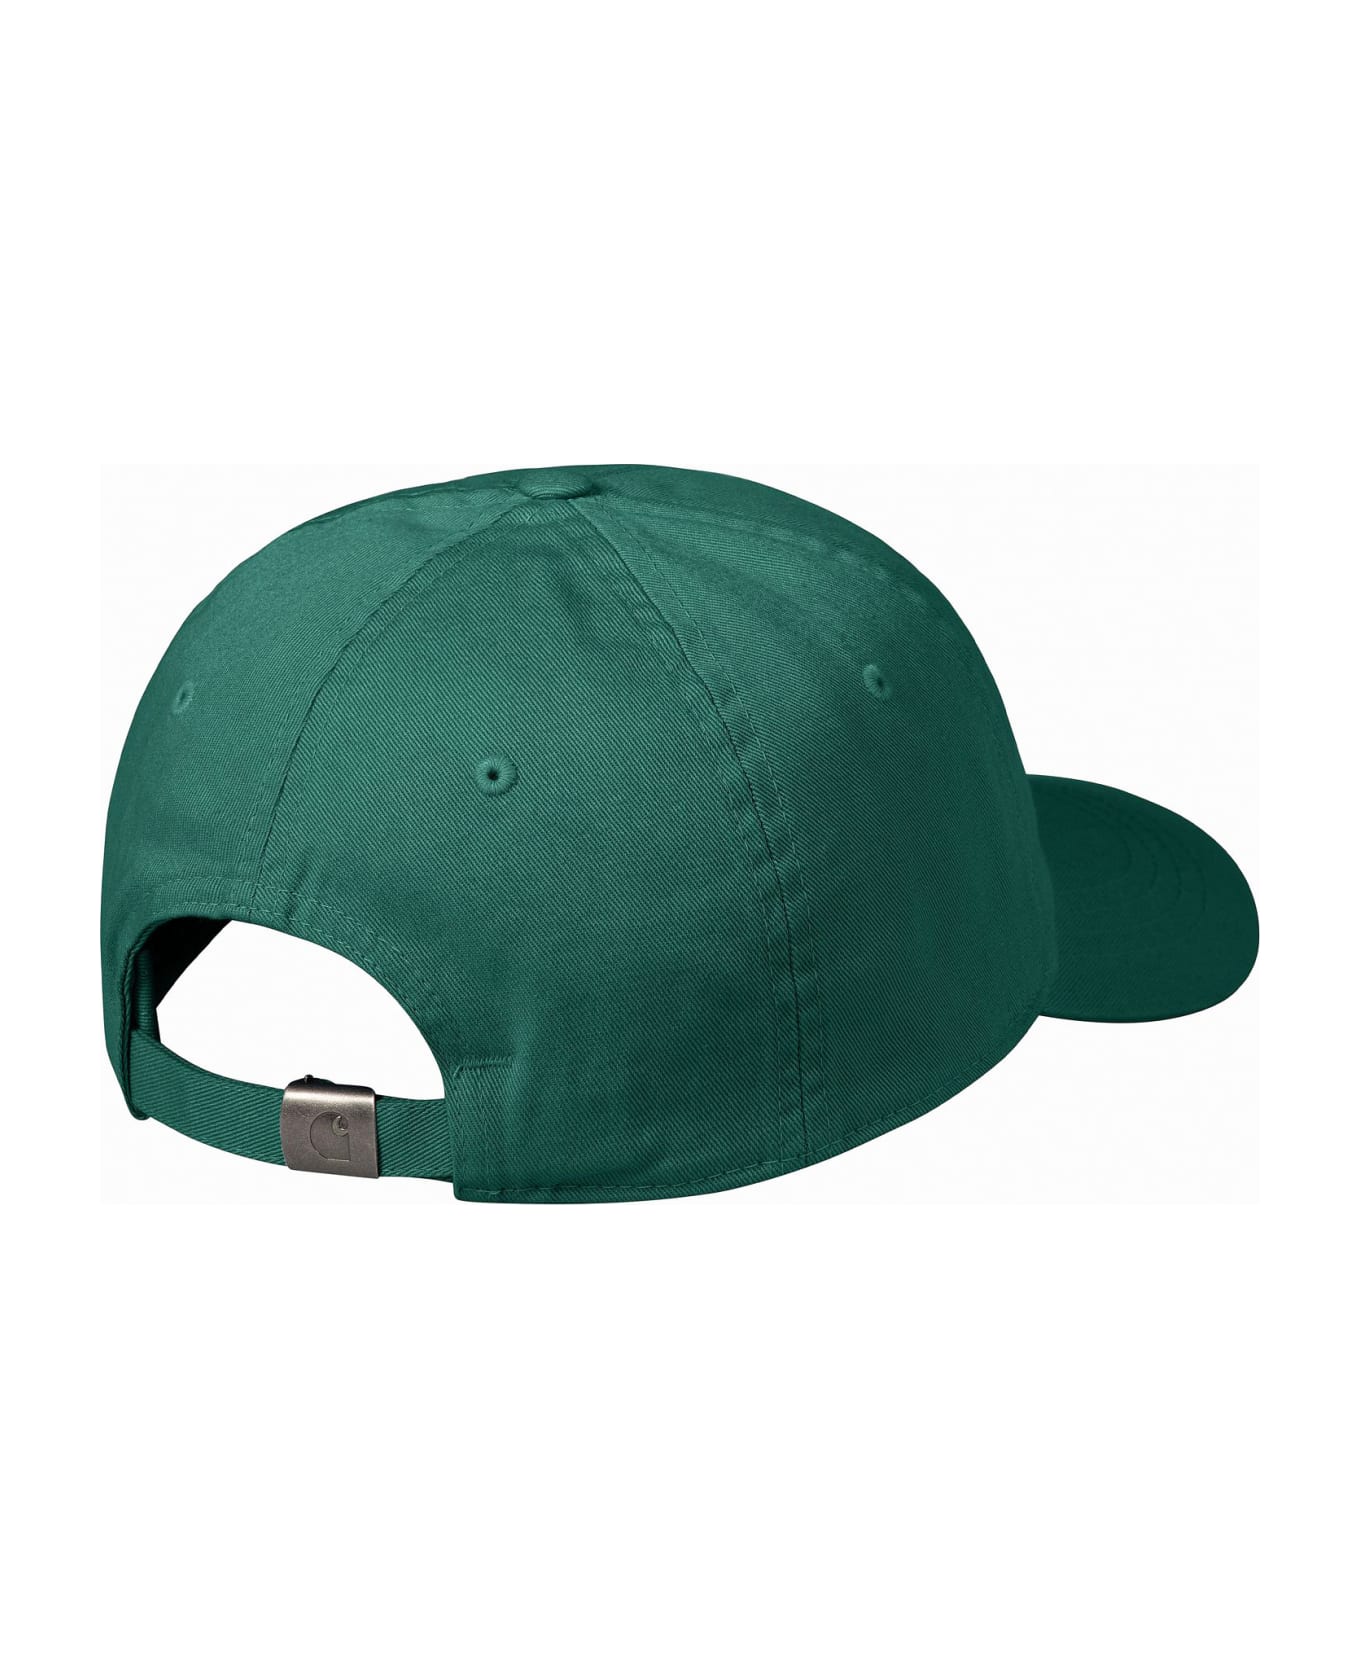 Carhartt Hats Green - Green 帽子